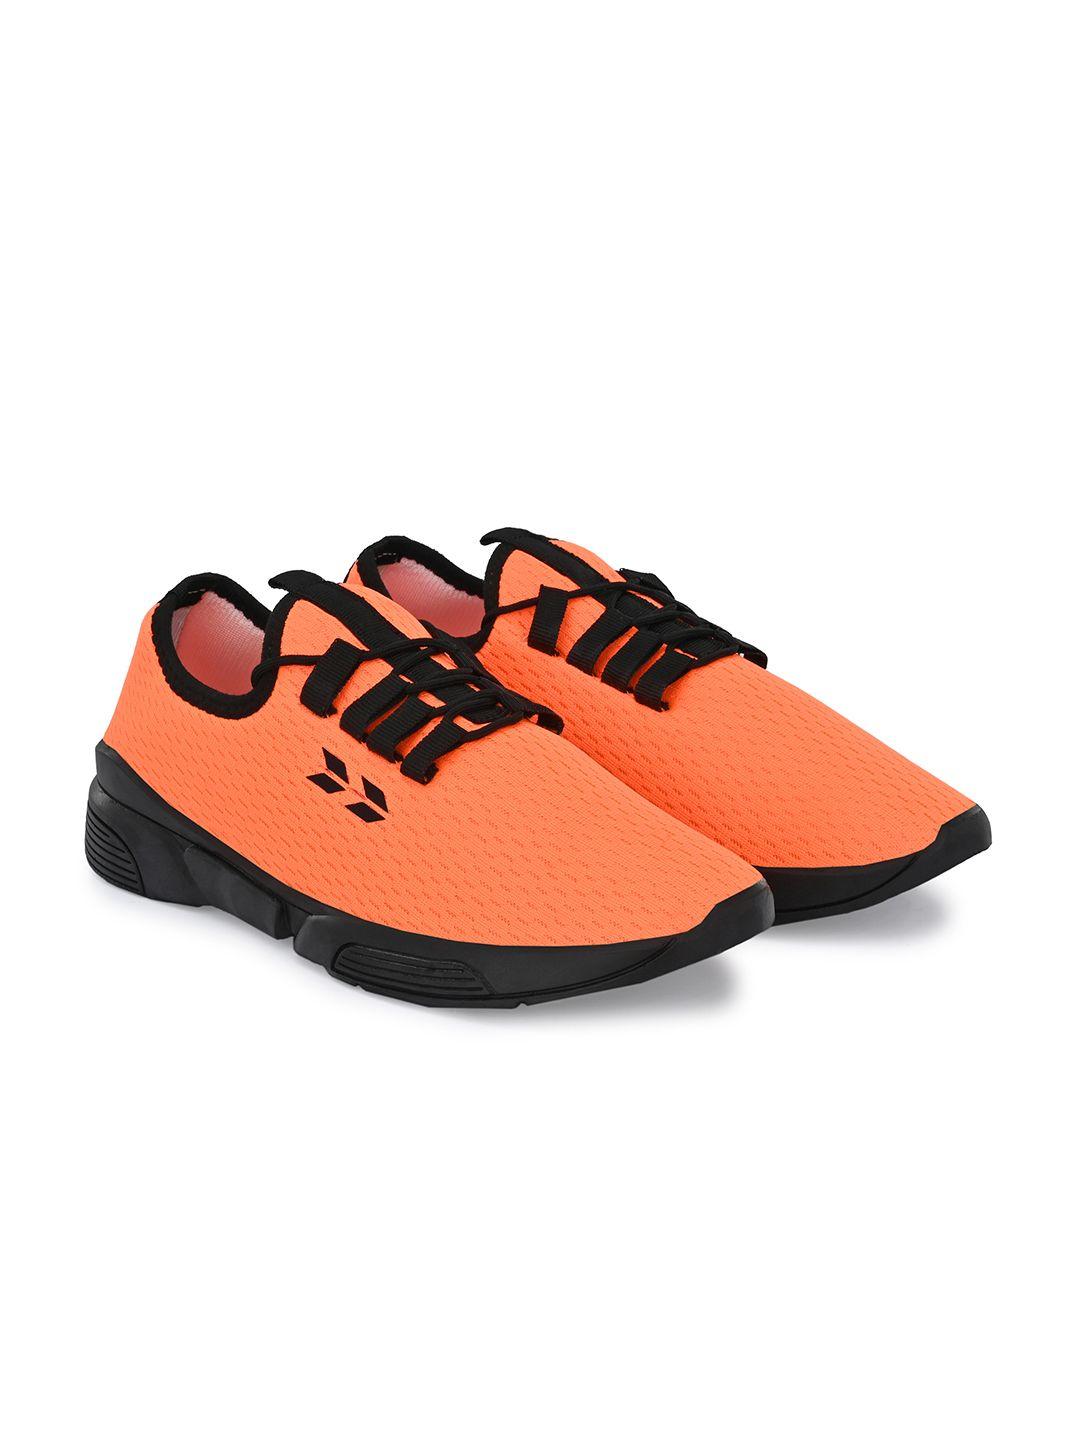 crew street men orange pu sneakers